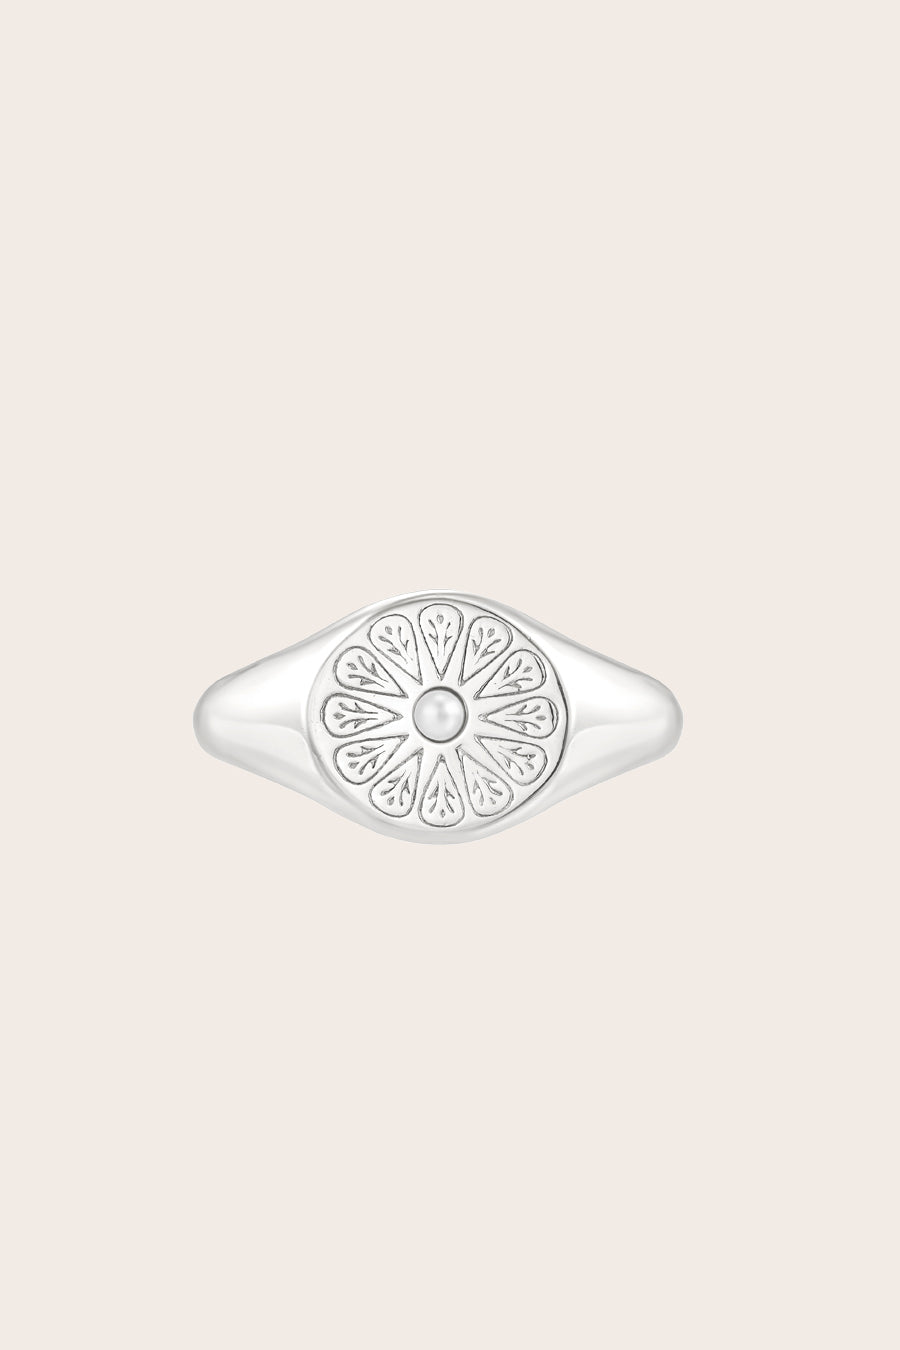 Silver June Signet Birthstone Ring on cream background